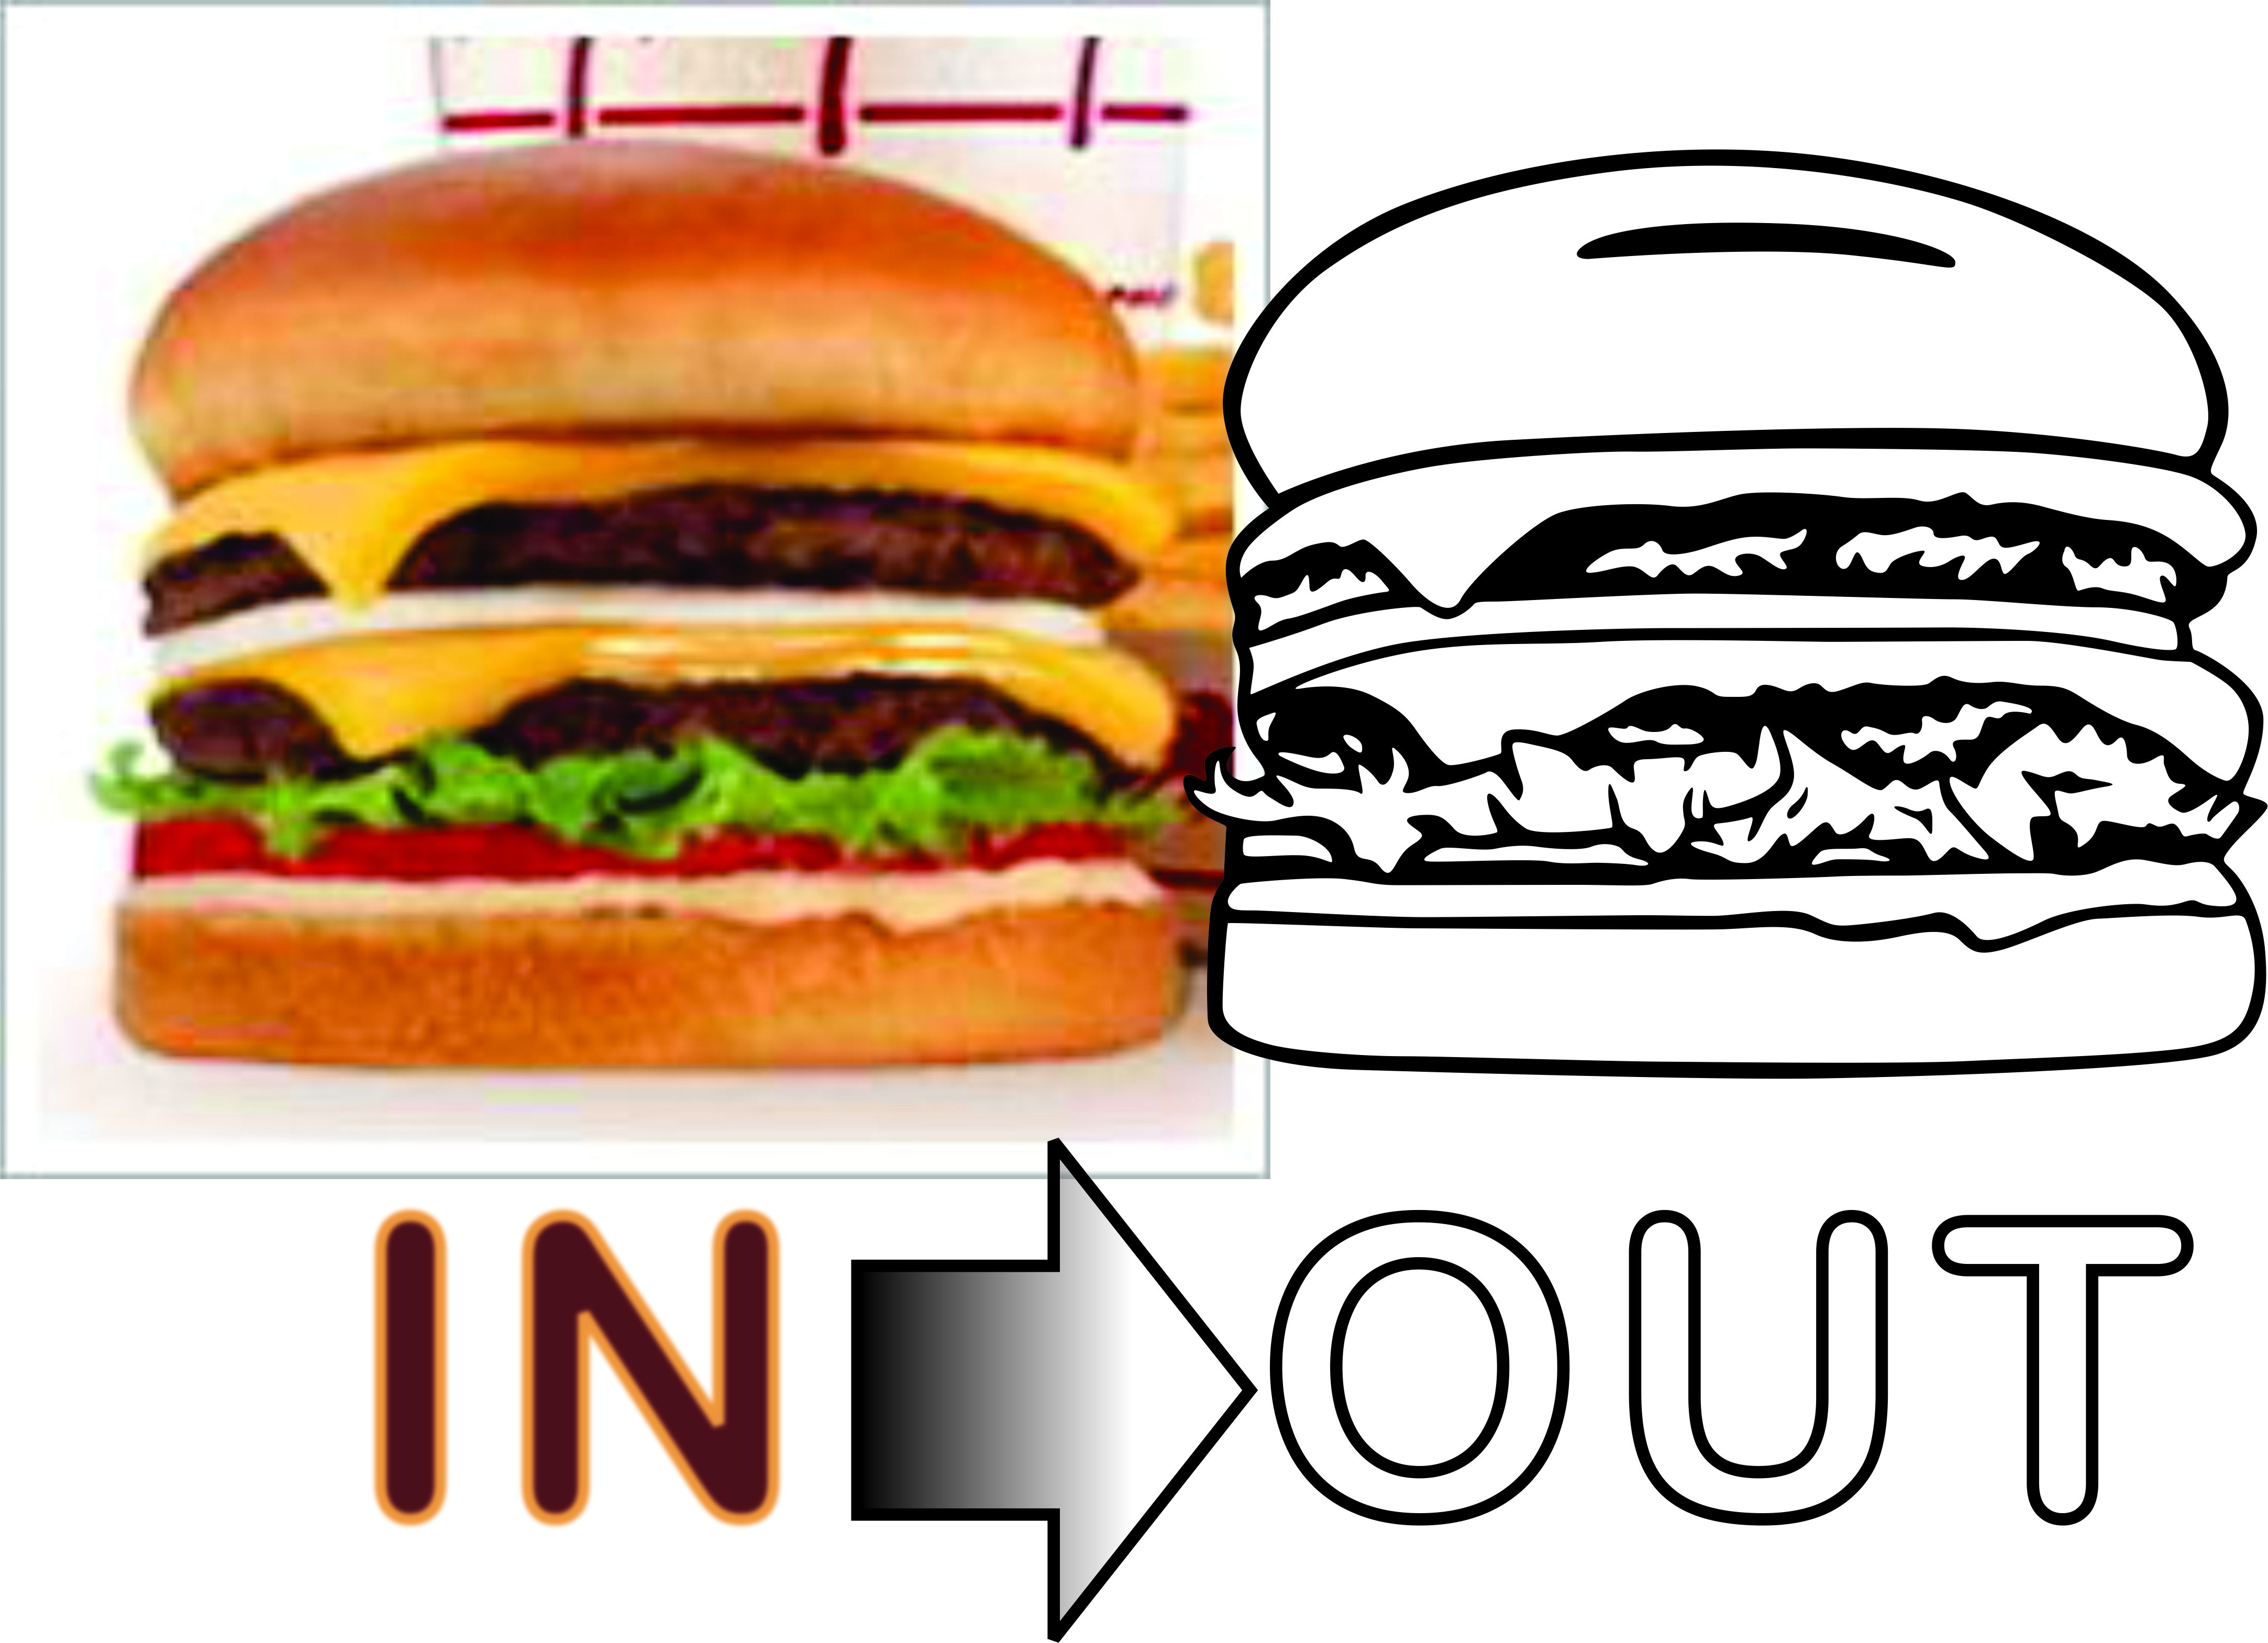 burger artwork